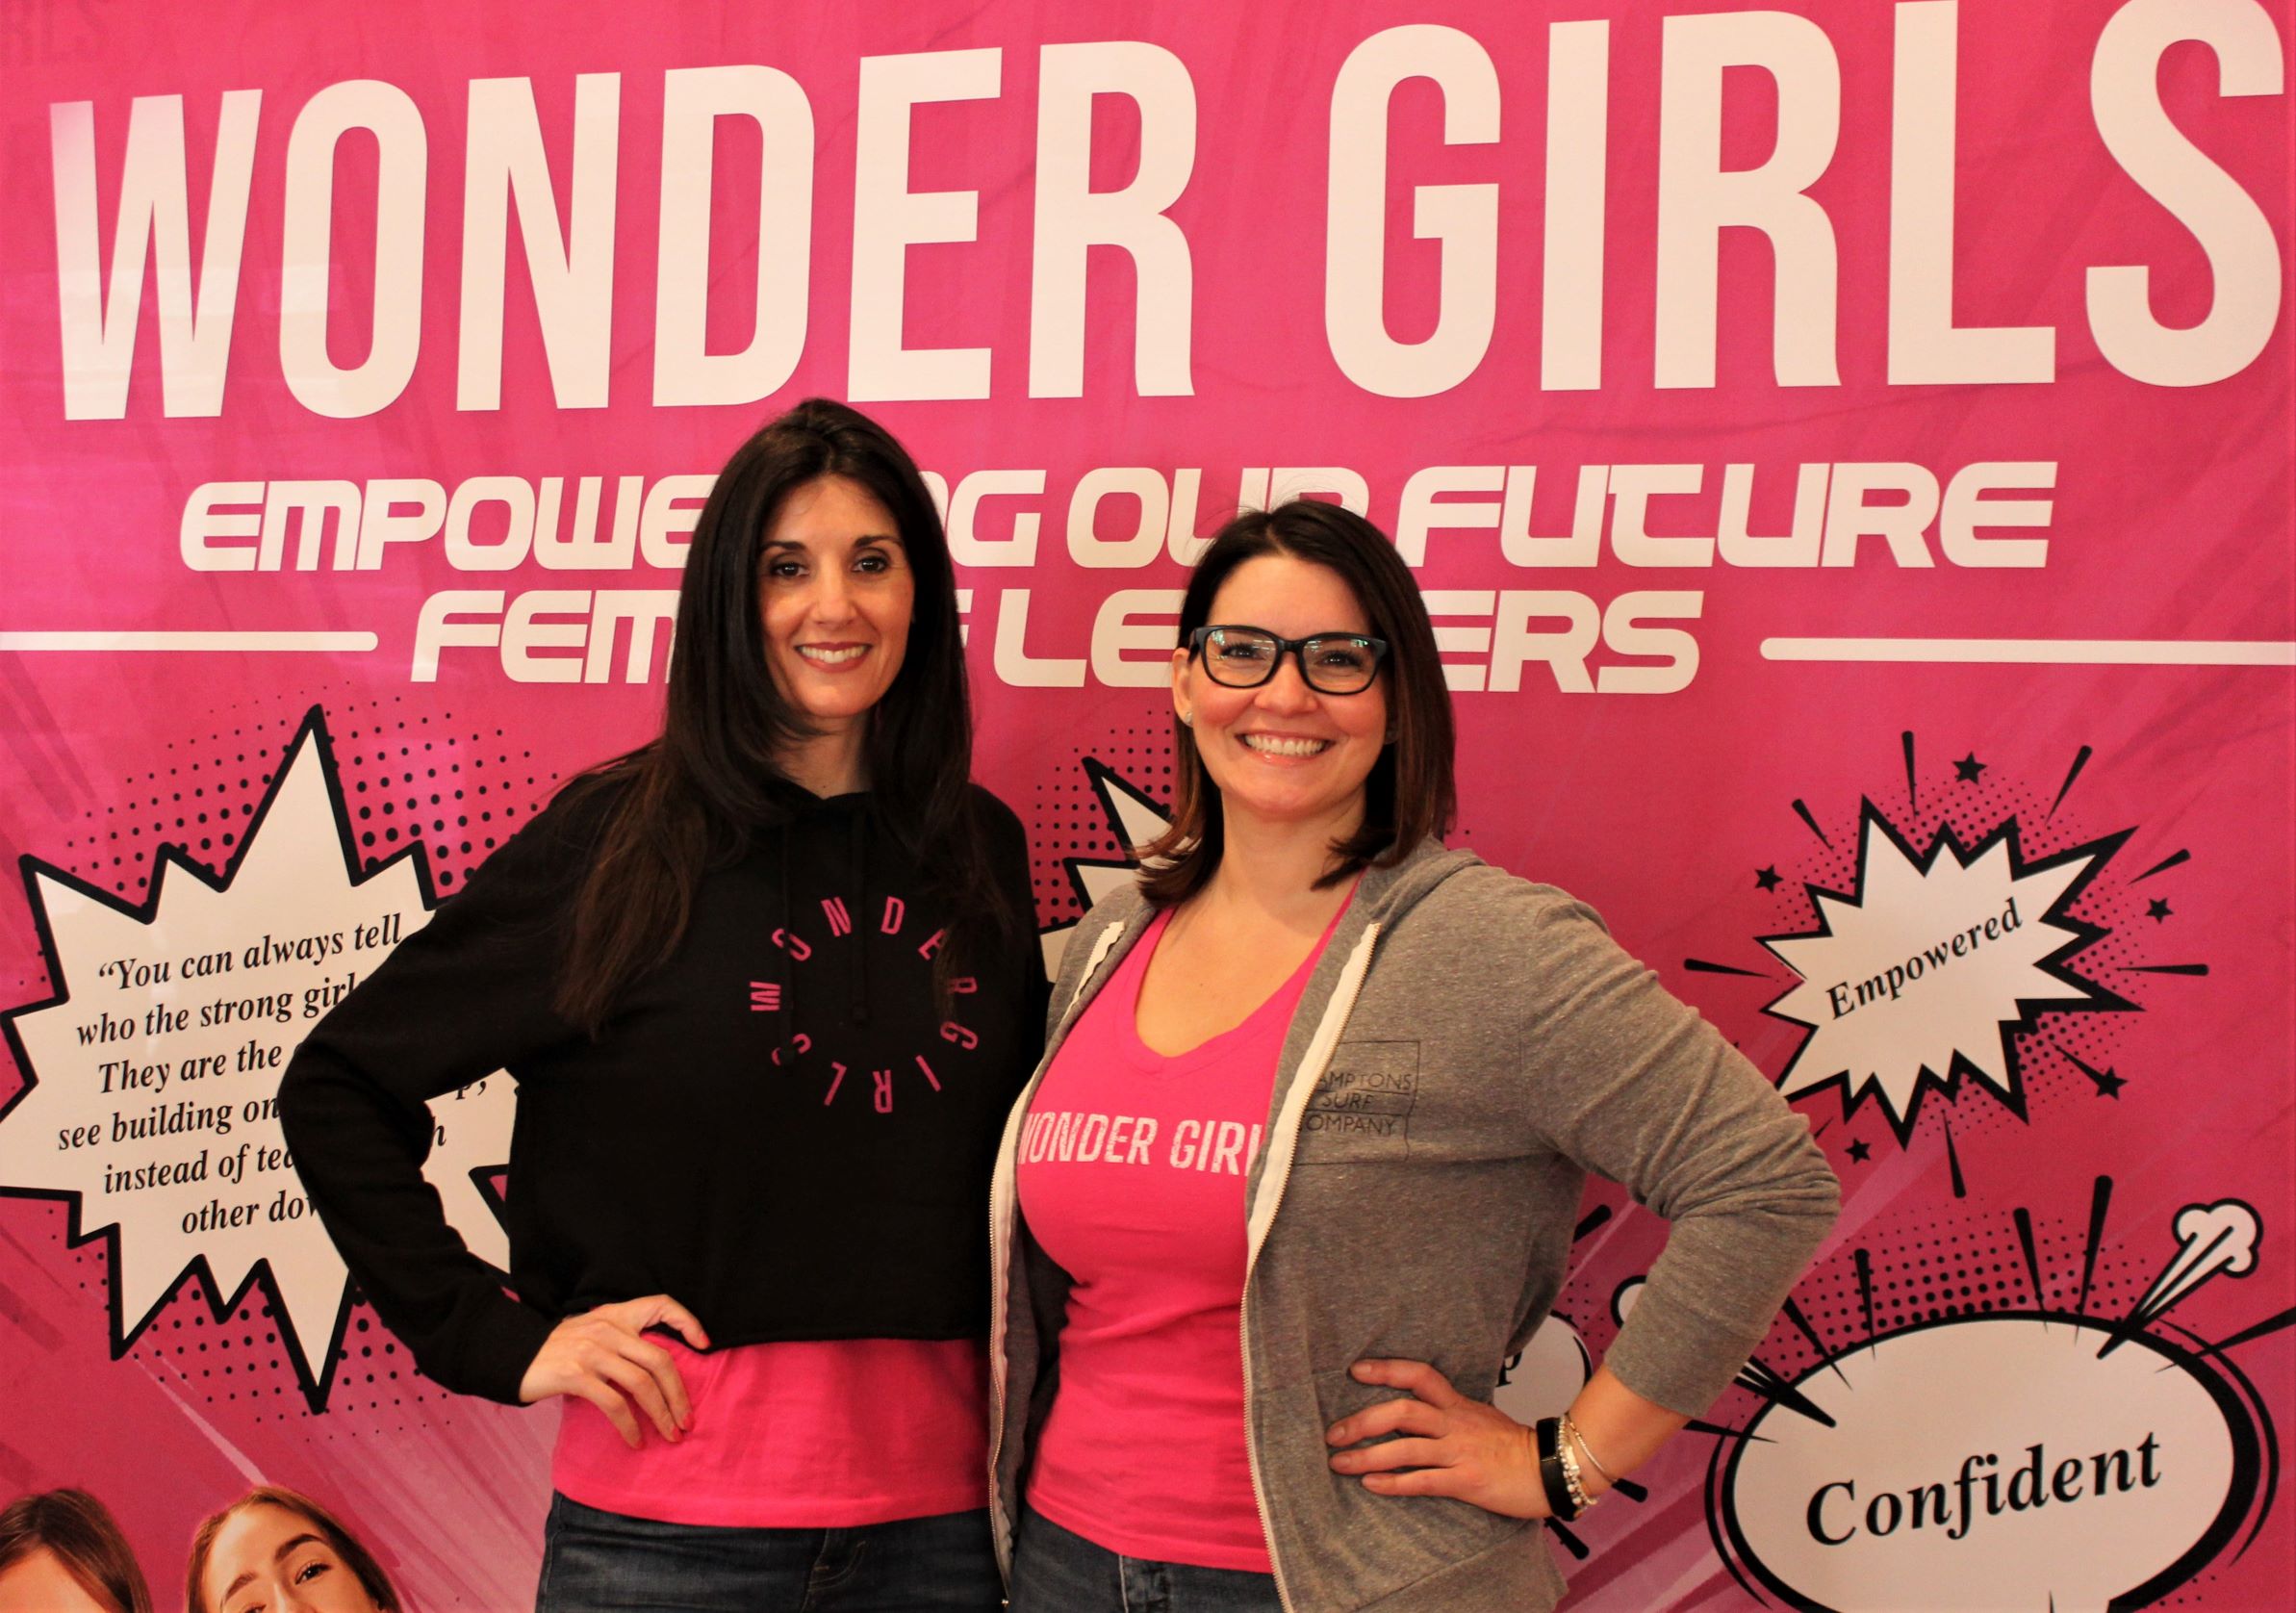 Wonder Girls Co-Founders Natalie Maniscalco and Irene Zenvoudis